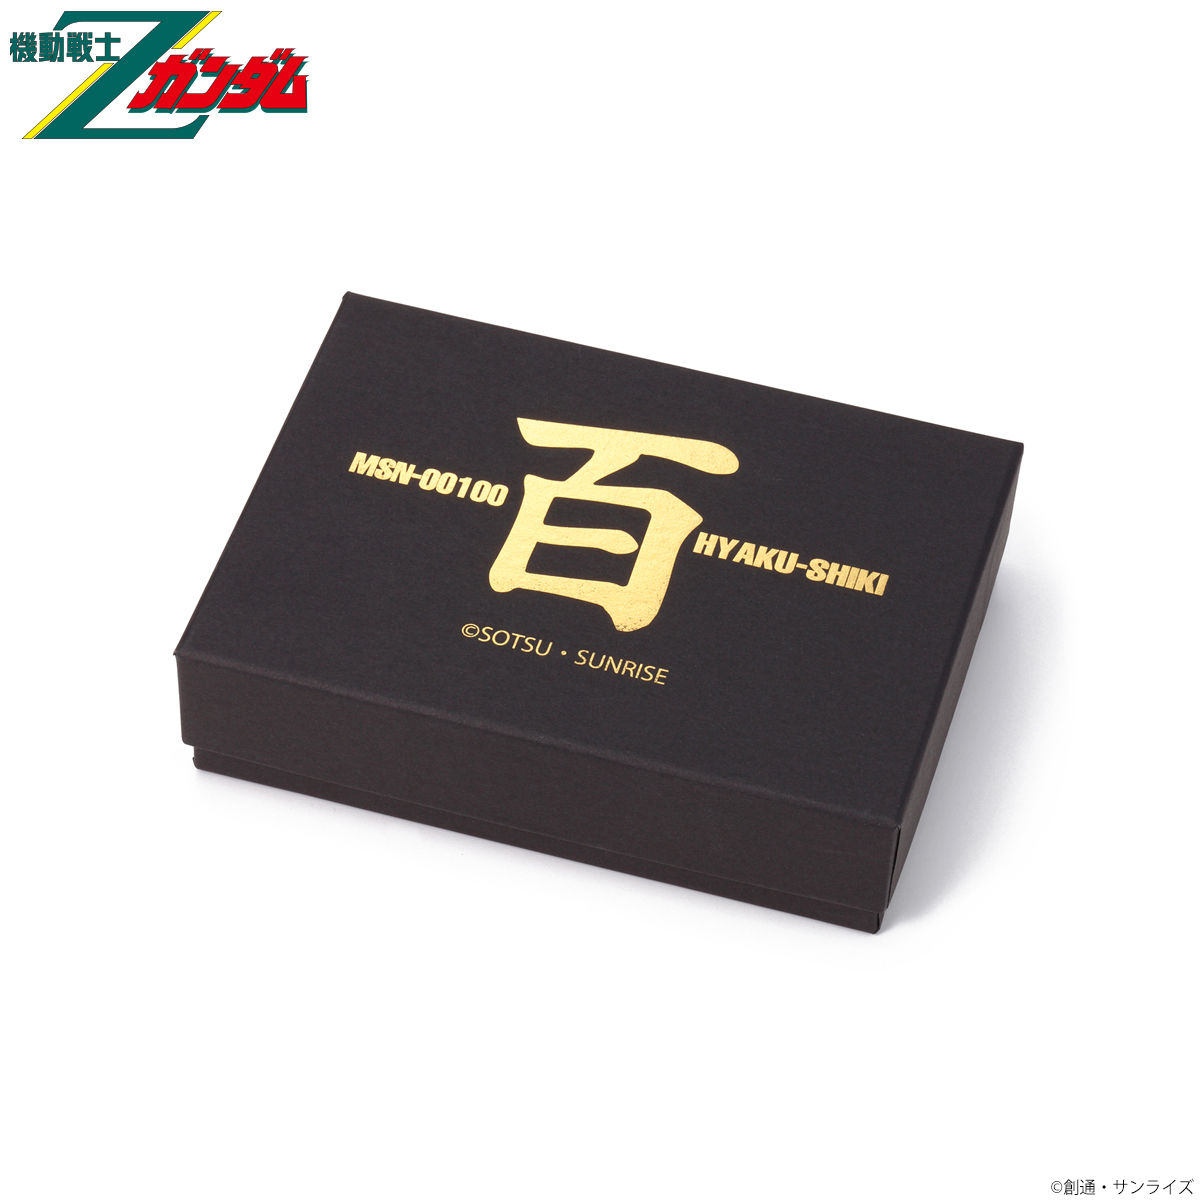 Mobile Suit Zeta Gundam MSN-00100 Passcase